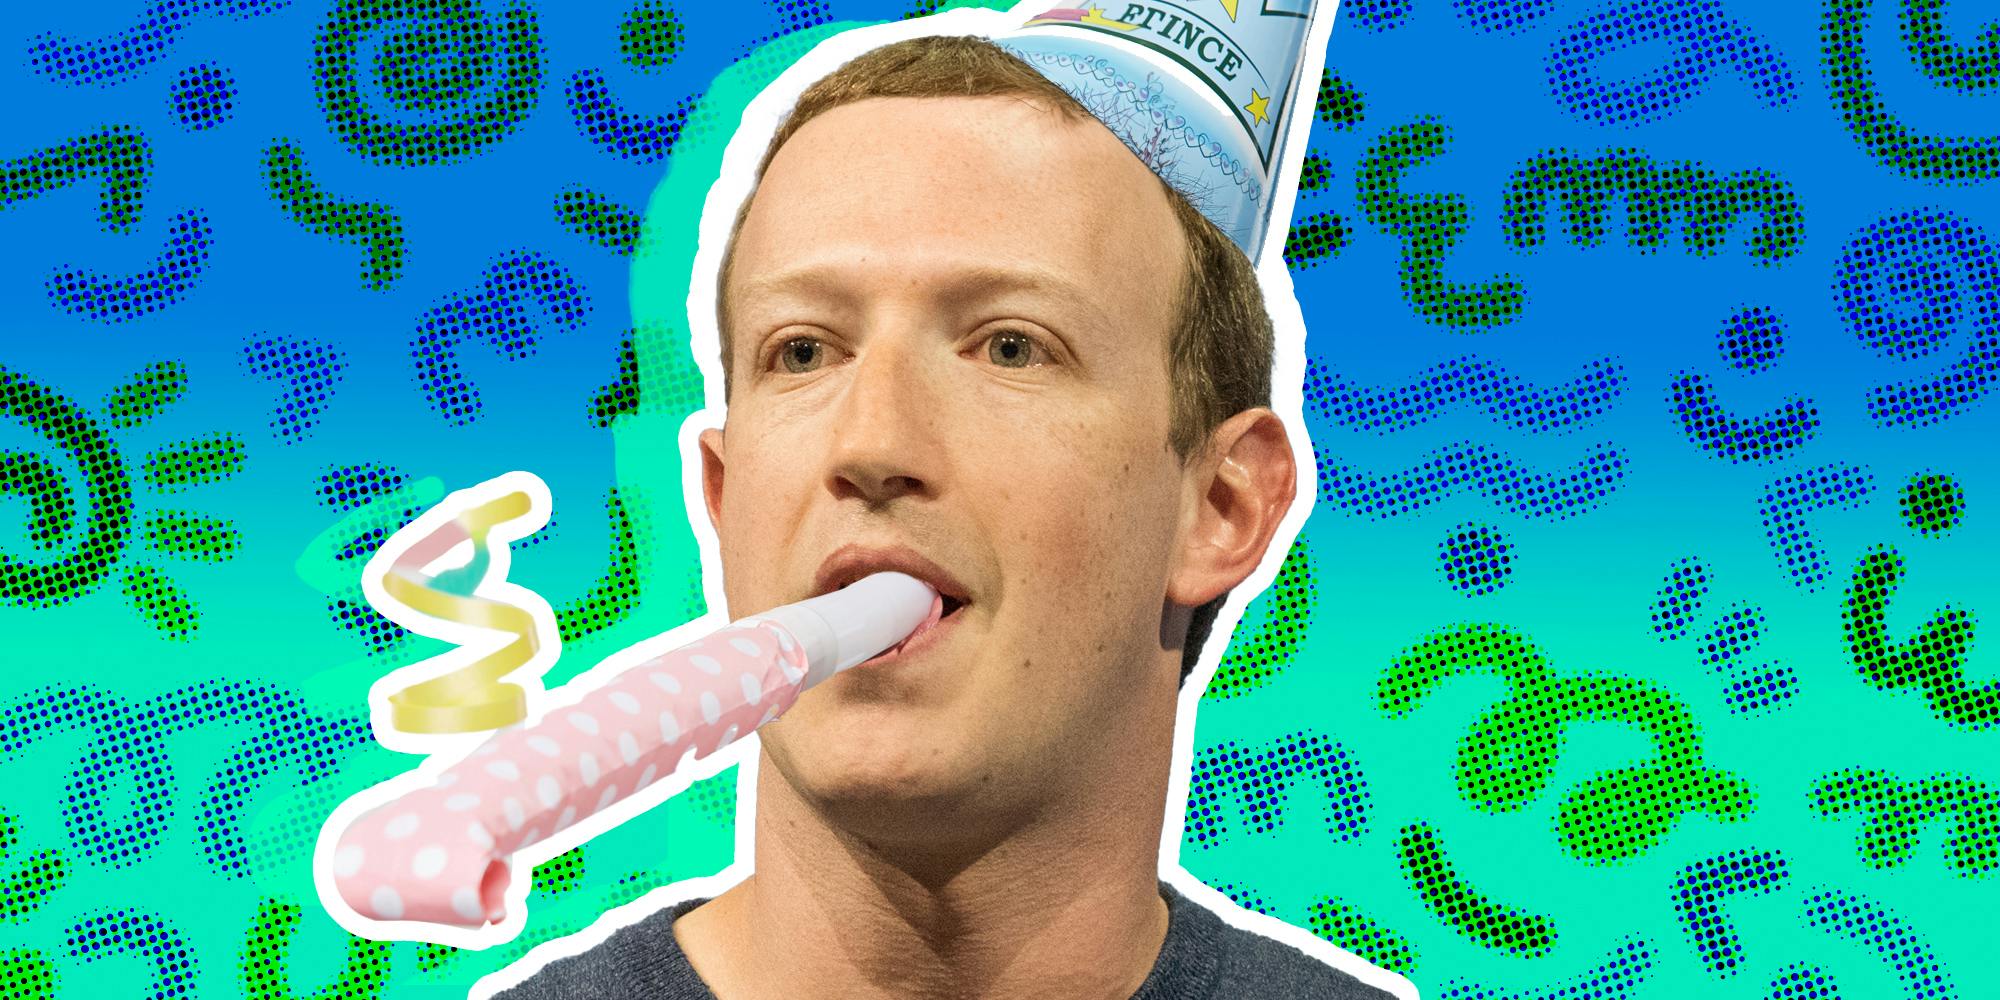 People are already selling replicas of Mark Zuckerberg’s birthday shirt